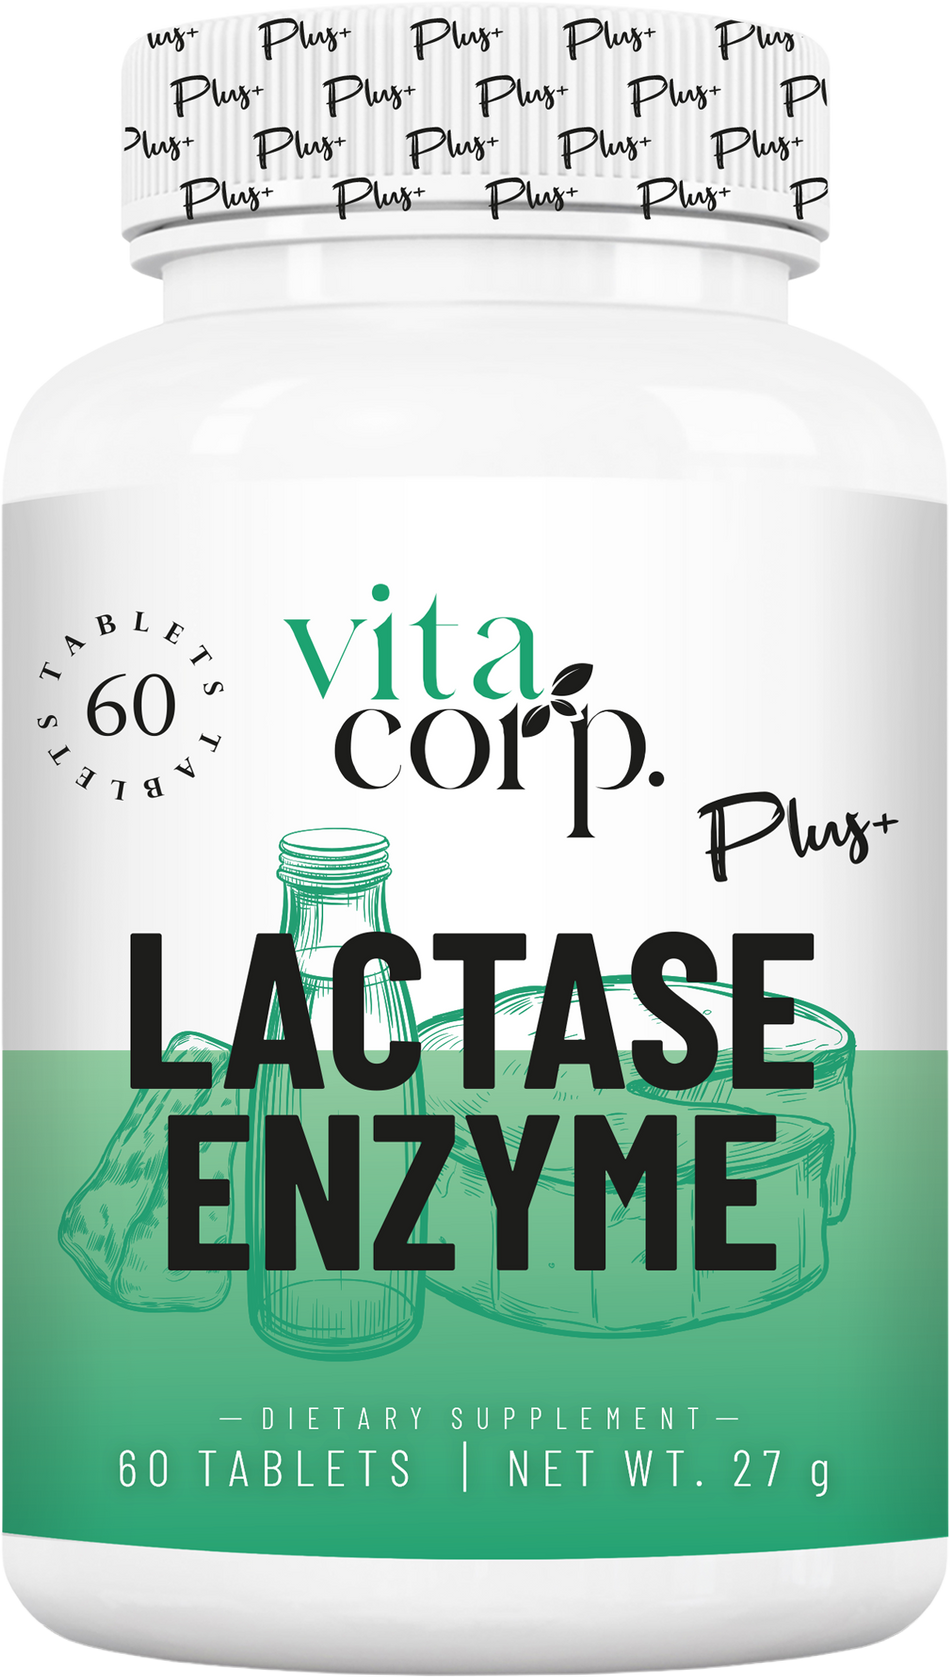 Lactase Enzyme - BadiZdrav.BG